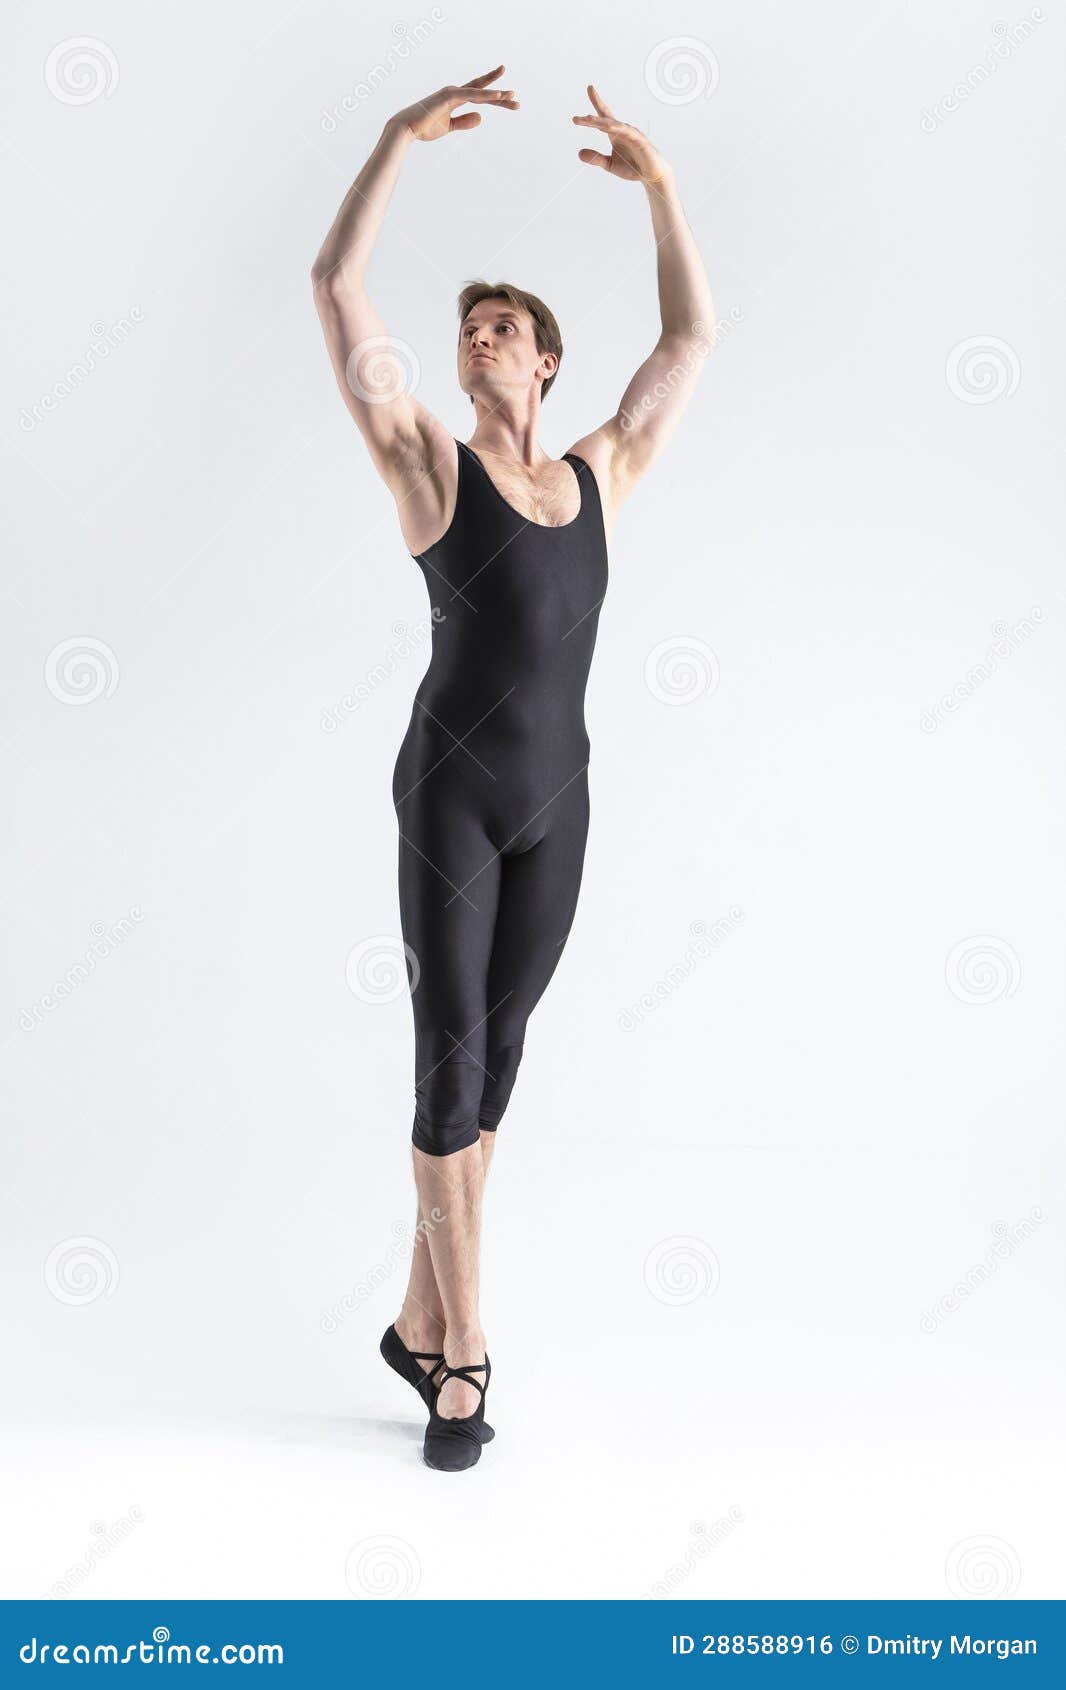 Contemporary Ballet Dancer Flexible Athletic Man Posing in Black Tights ...